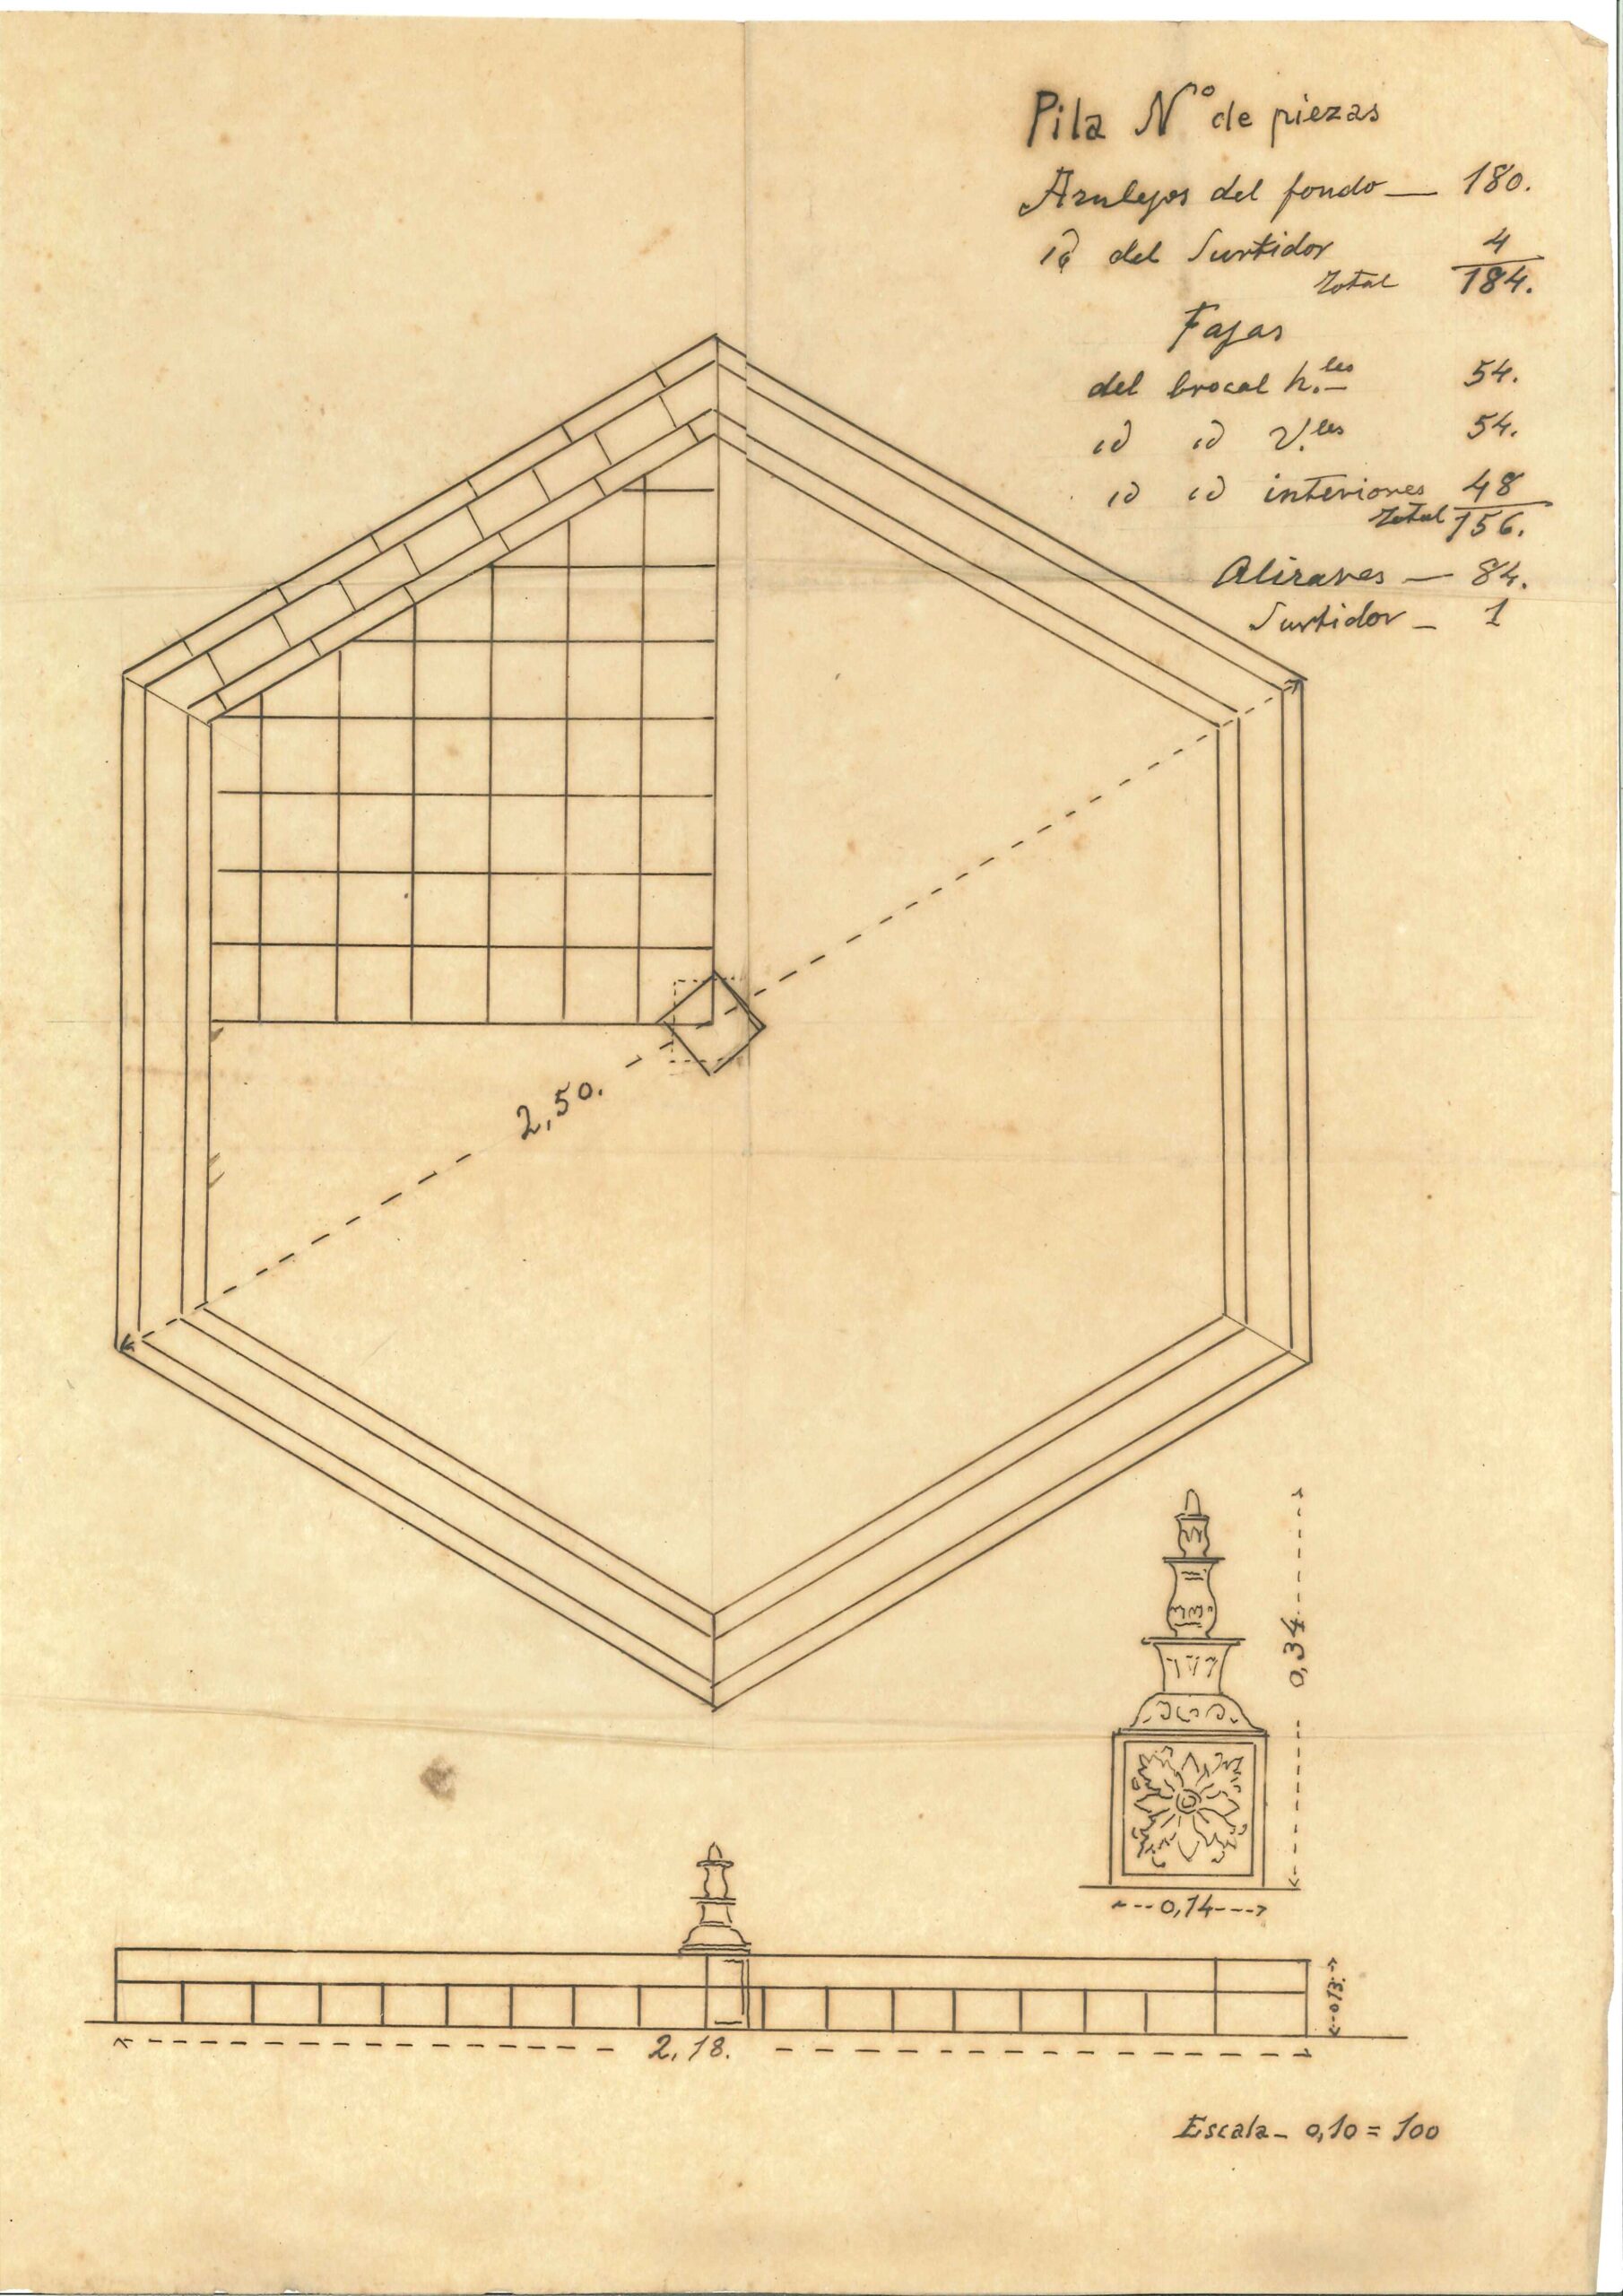 01351. Diseño. Boceto para fuente hexagonal con surtidor central. Sevilla.